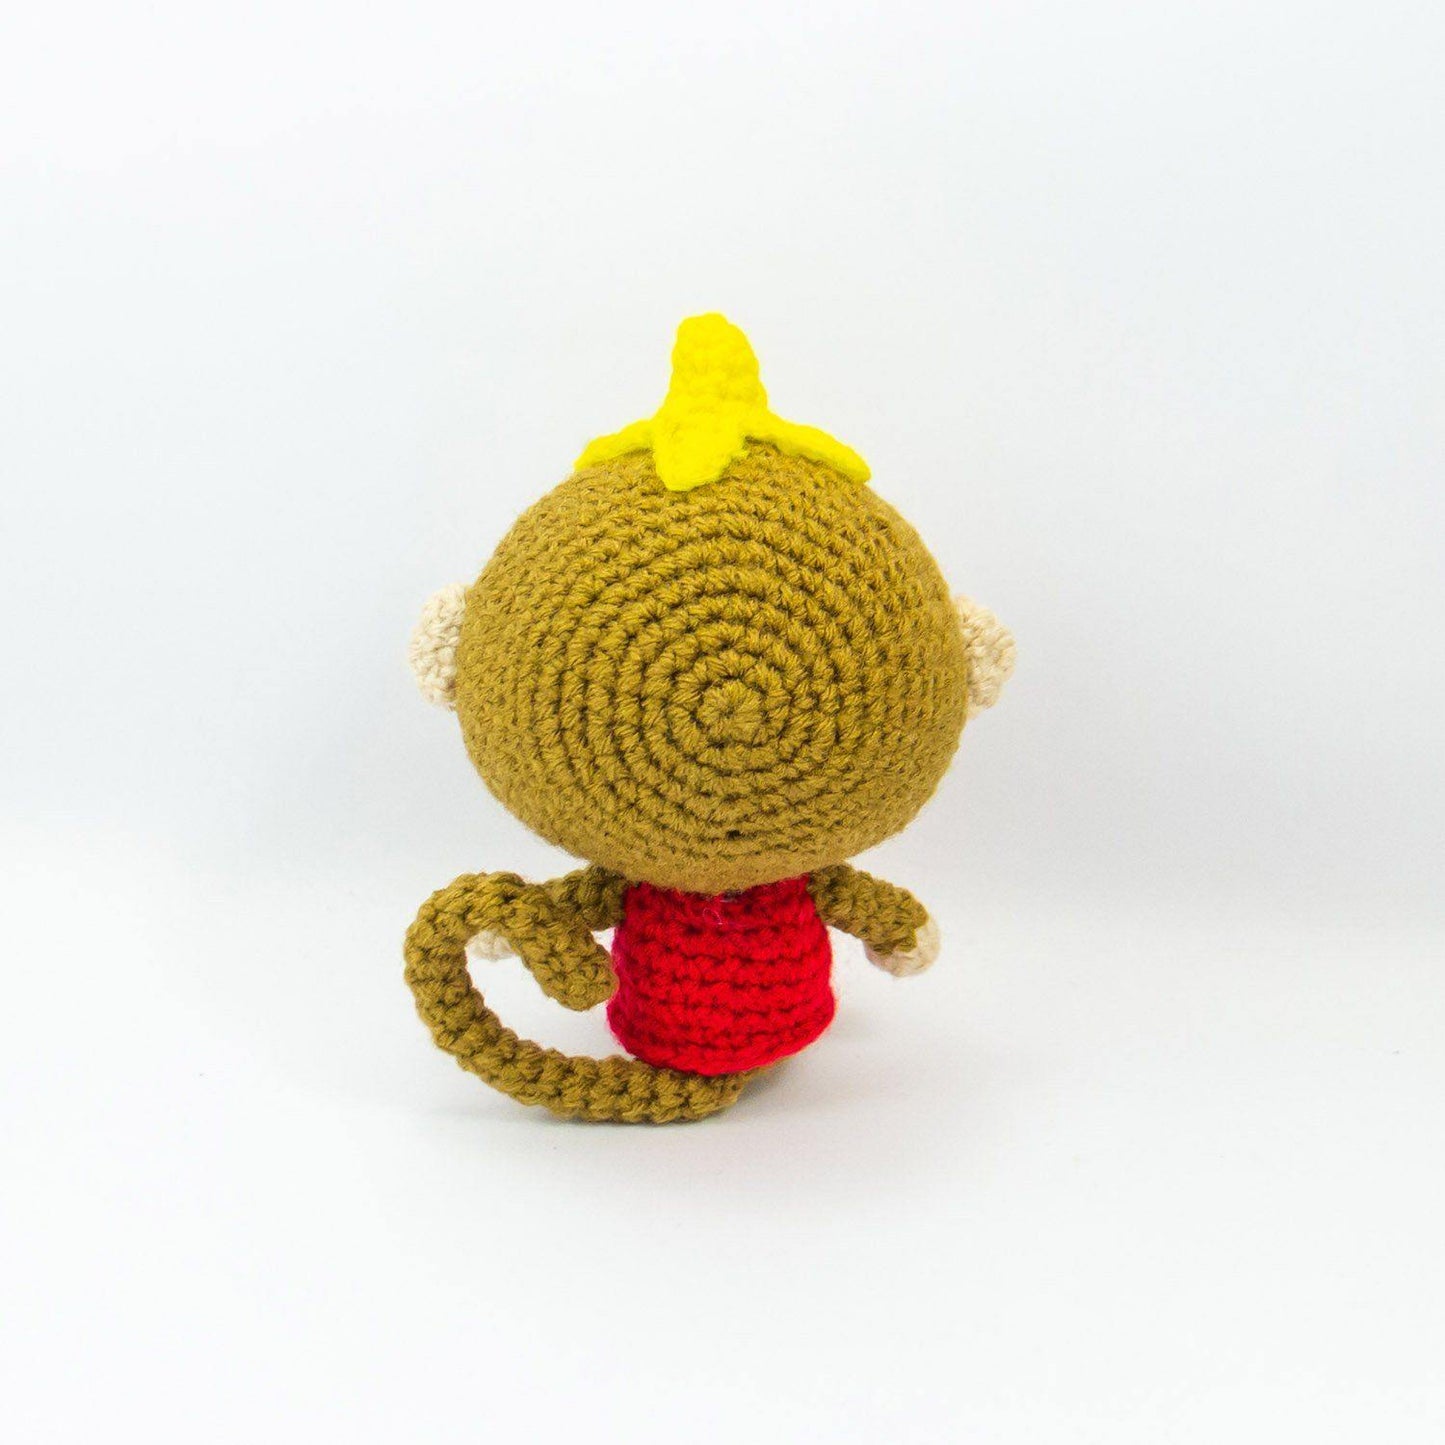 Crochet Monkey Plush Pattern for DIY gift